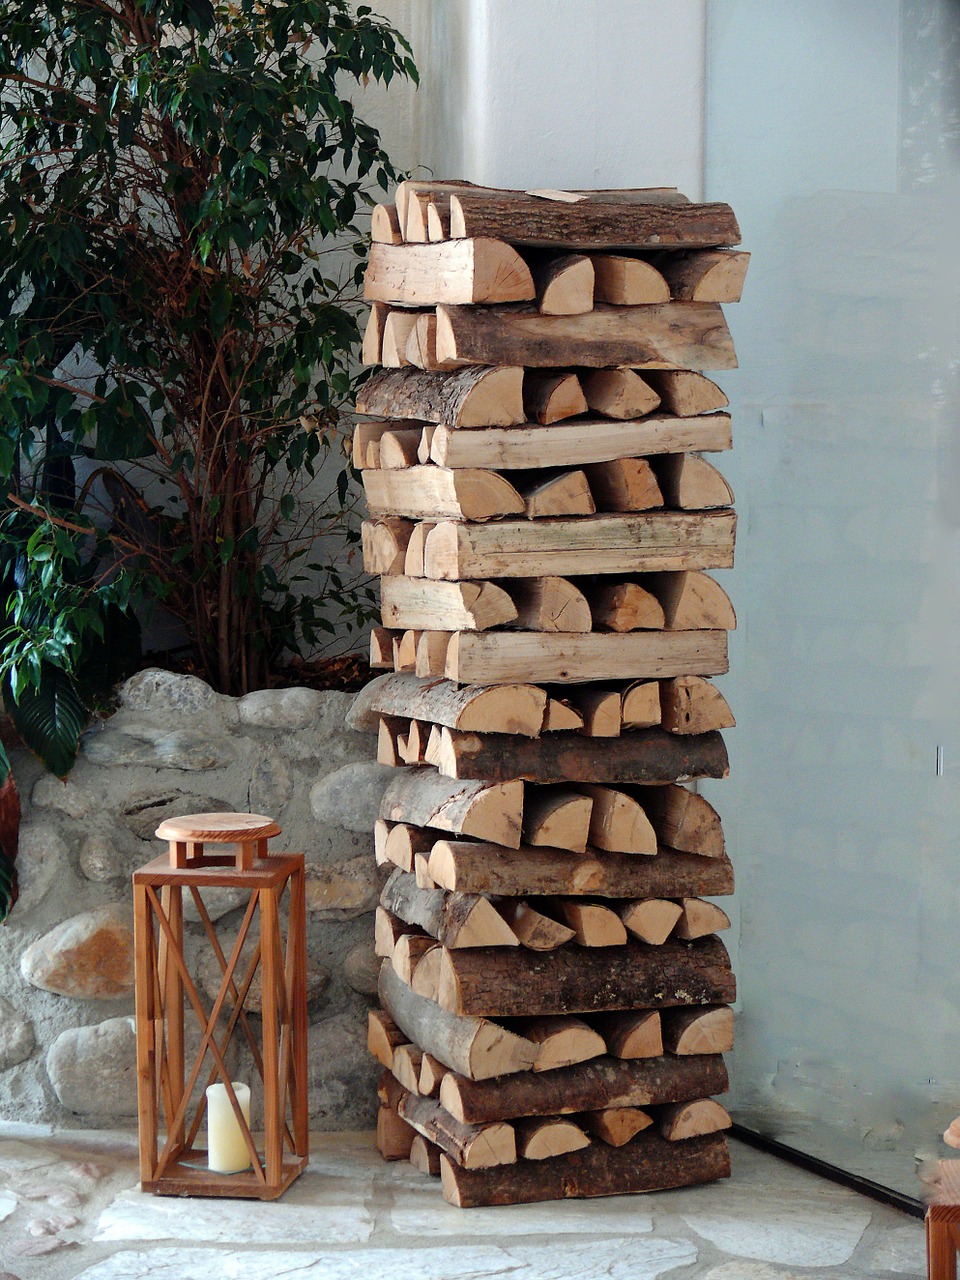 Ensure wood has a season to dry using the crosshatch method.